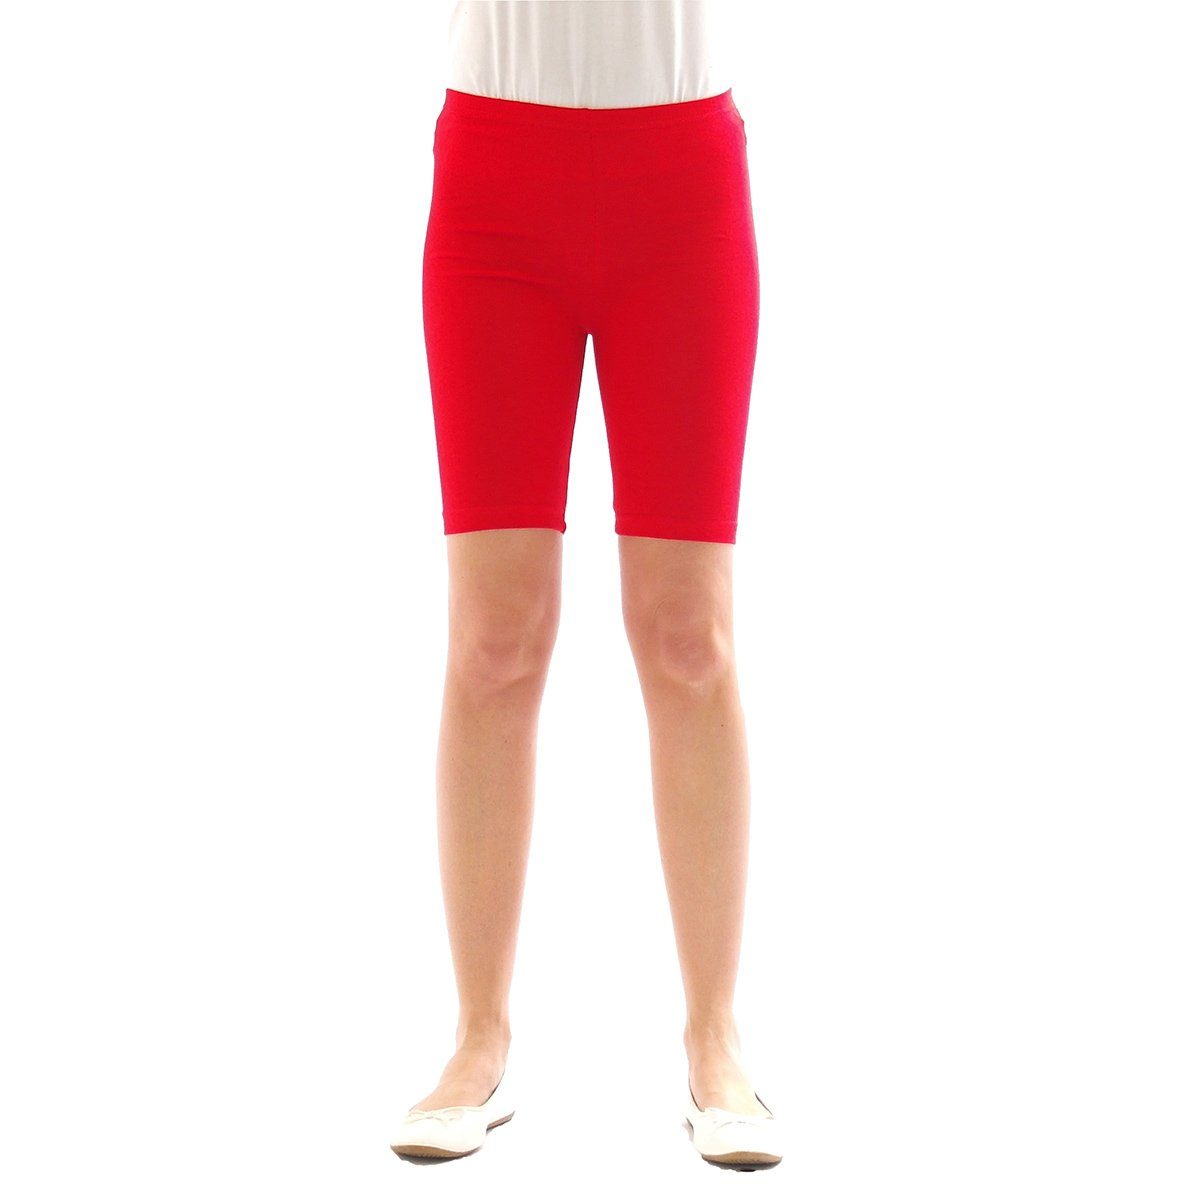 SYS Shorts Pants Baumwolle Kinder Sport Shorts Jungen 1/2 Mädchen rot